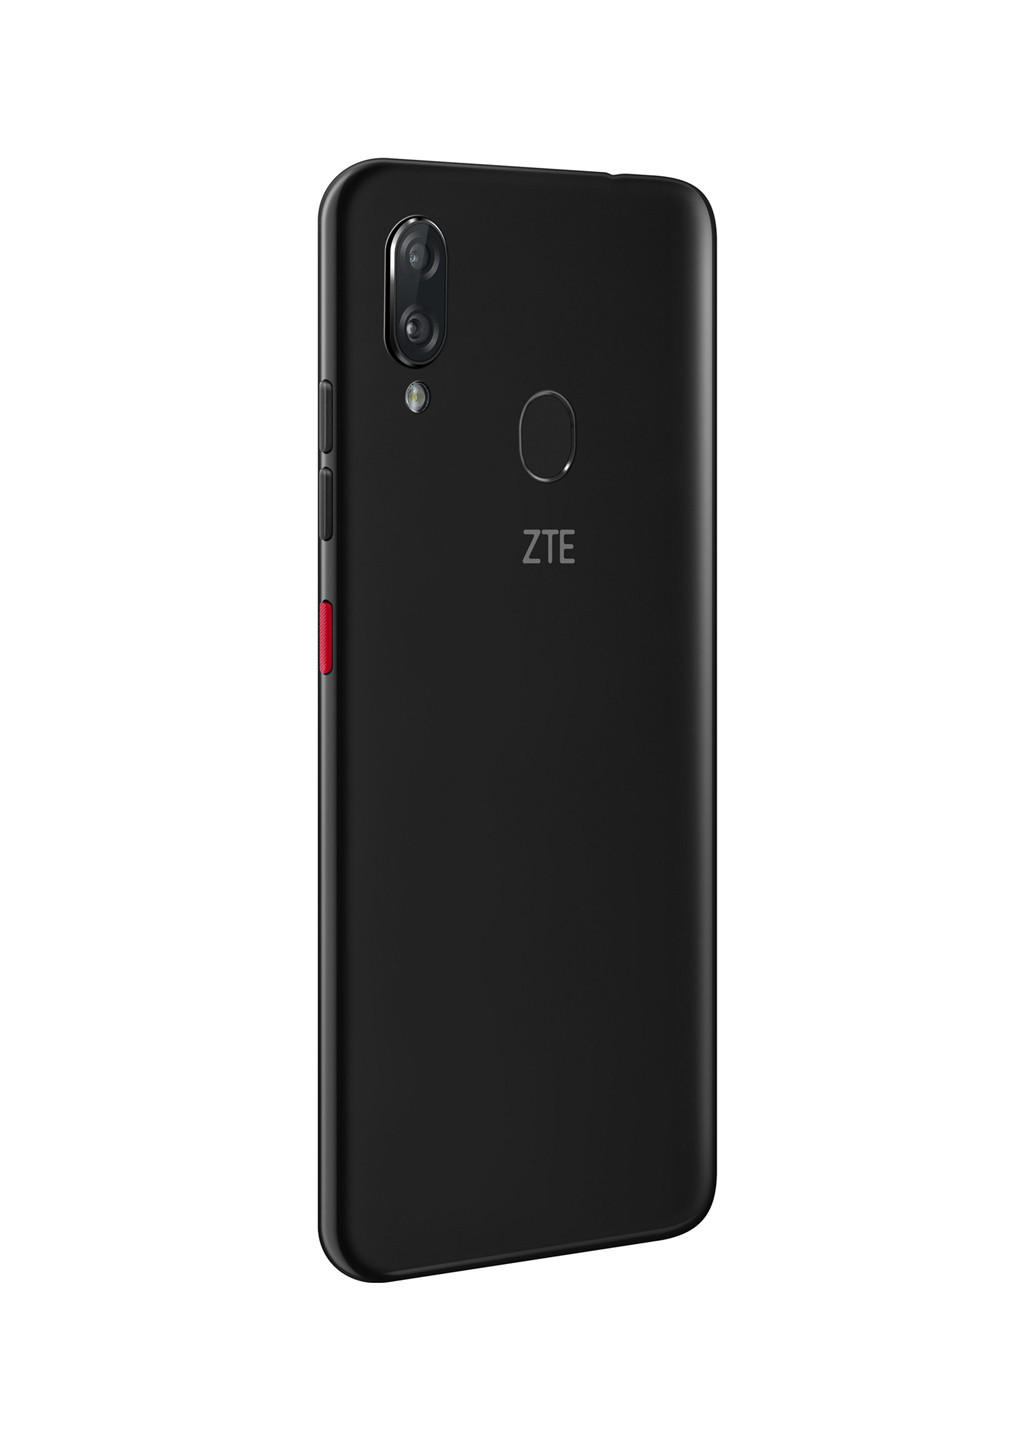 Смартфон BLADE A7 2 / 32GB Black ZTE blade a7 2/32gb black (135037816)